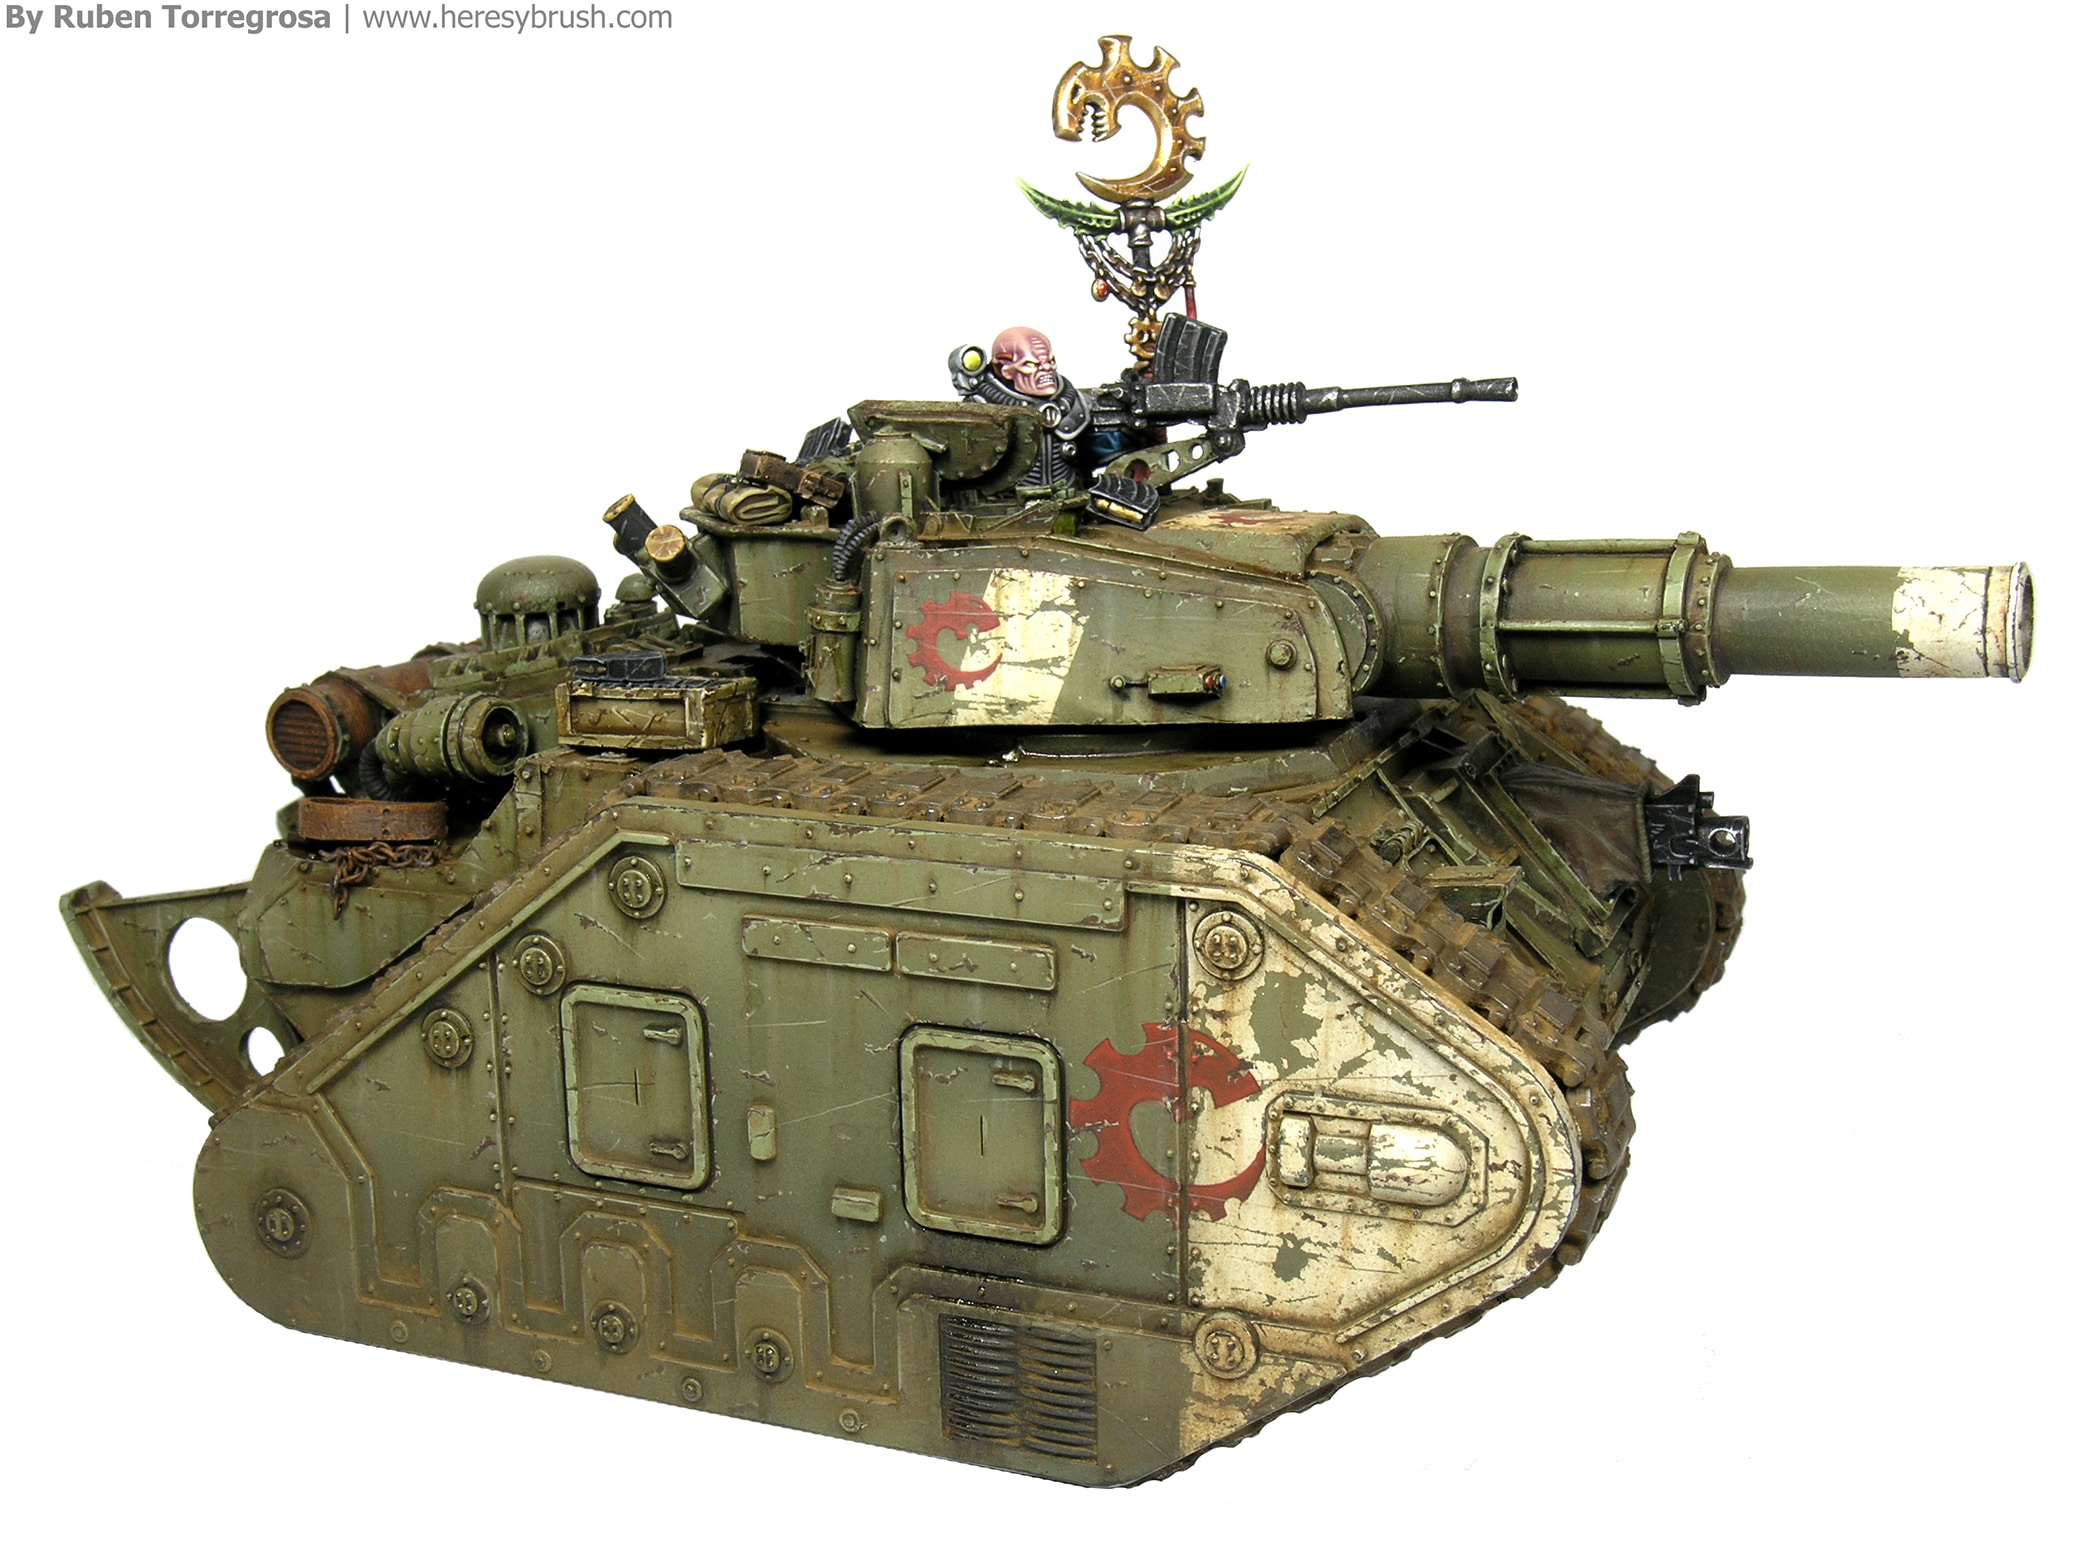 corto Imitación Lírico Warhammer 40.000 tanks I – HeresyBrush